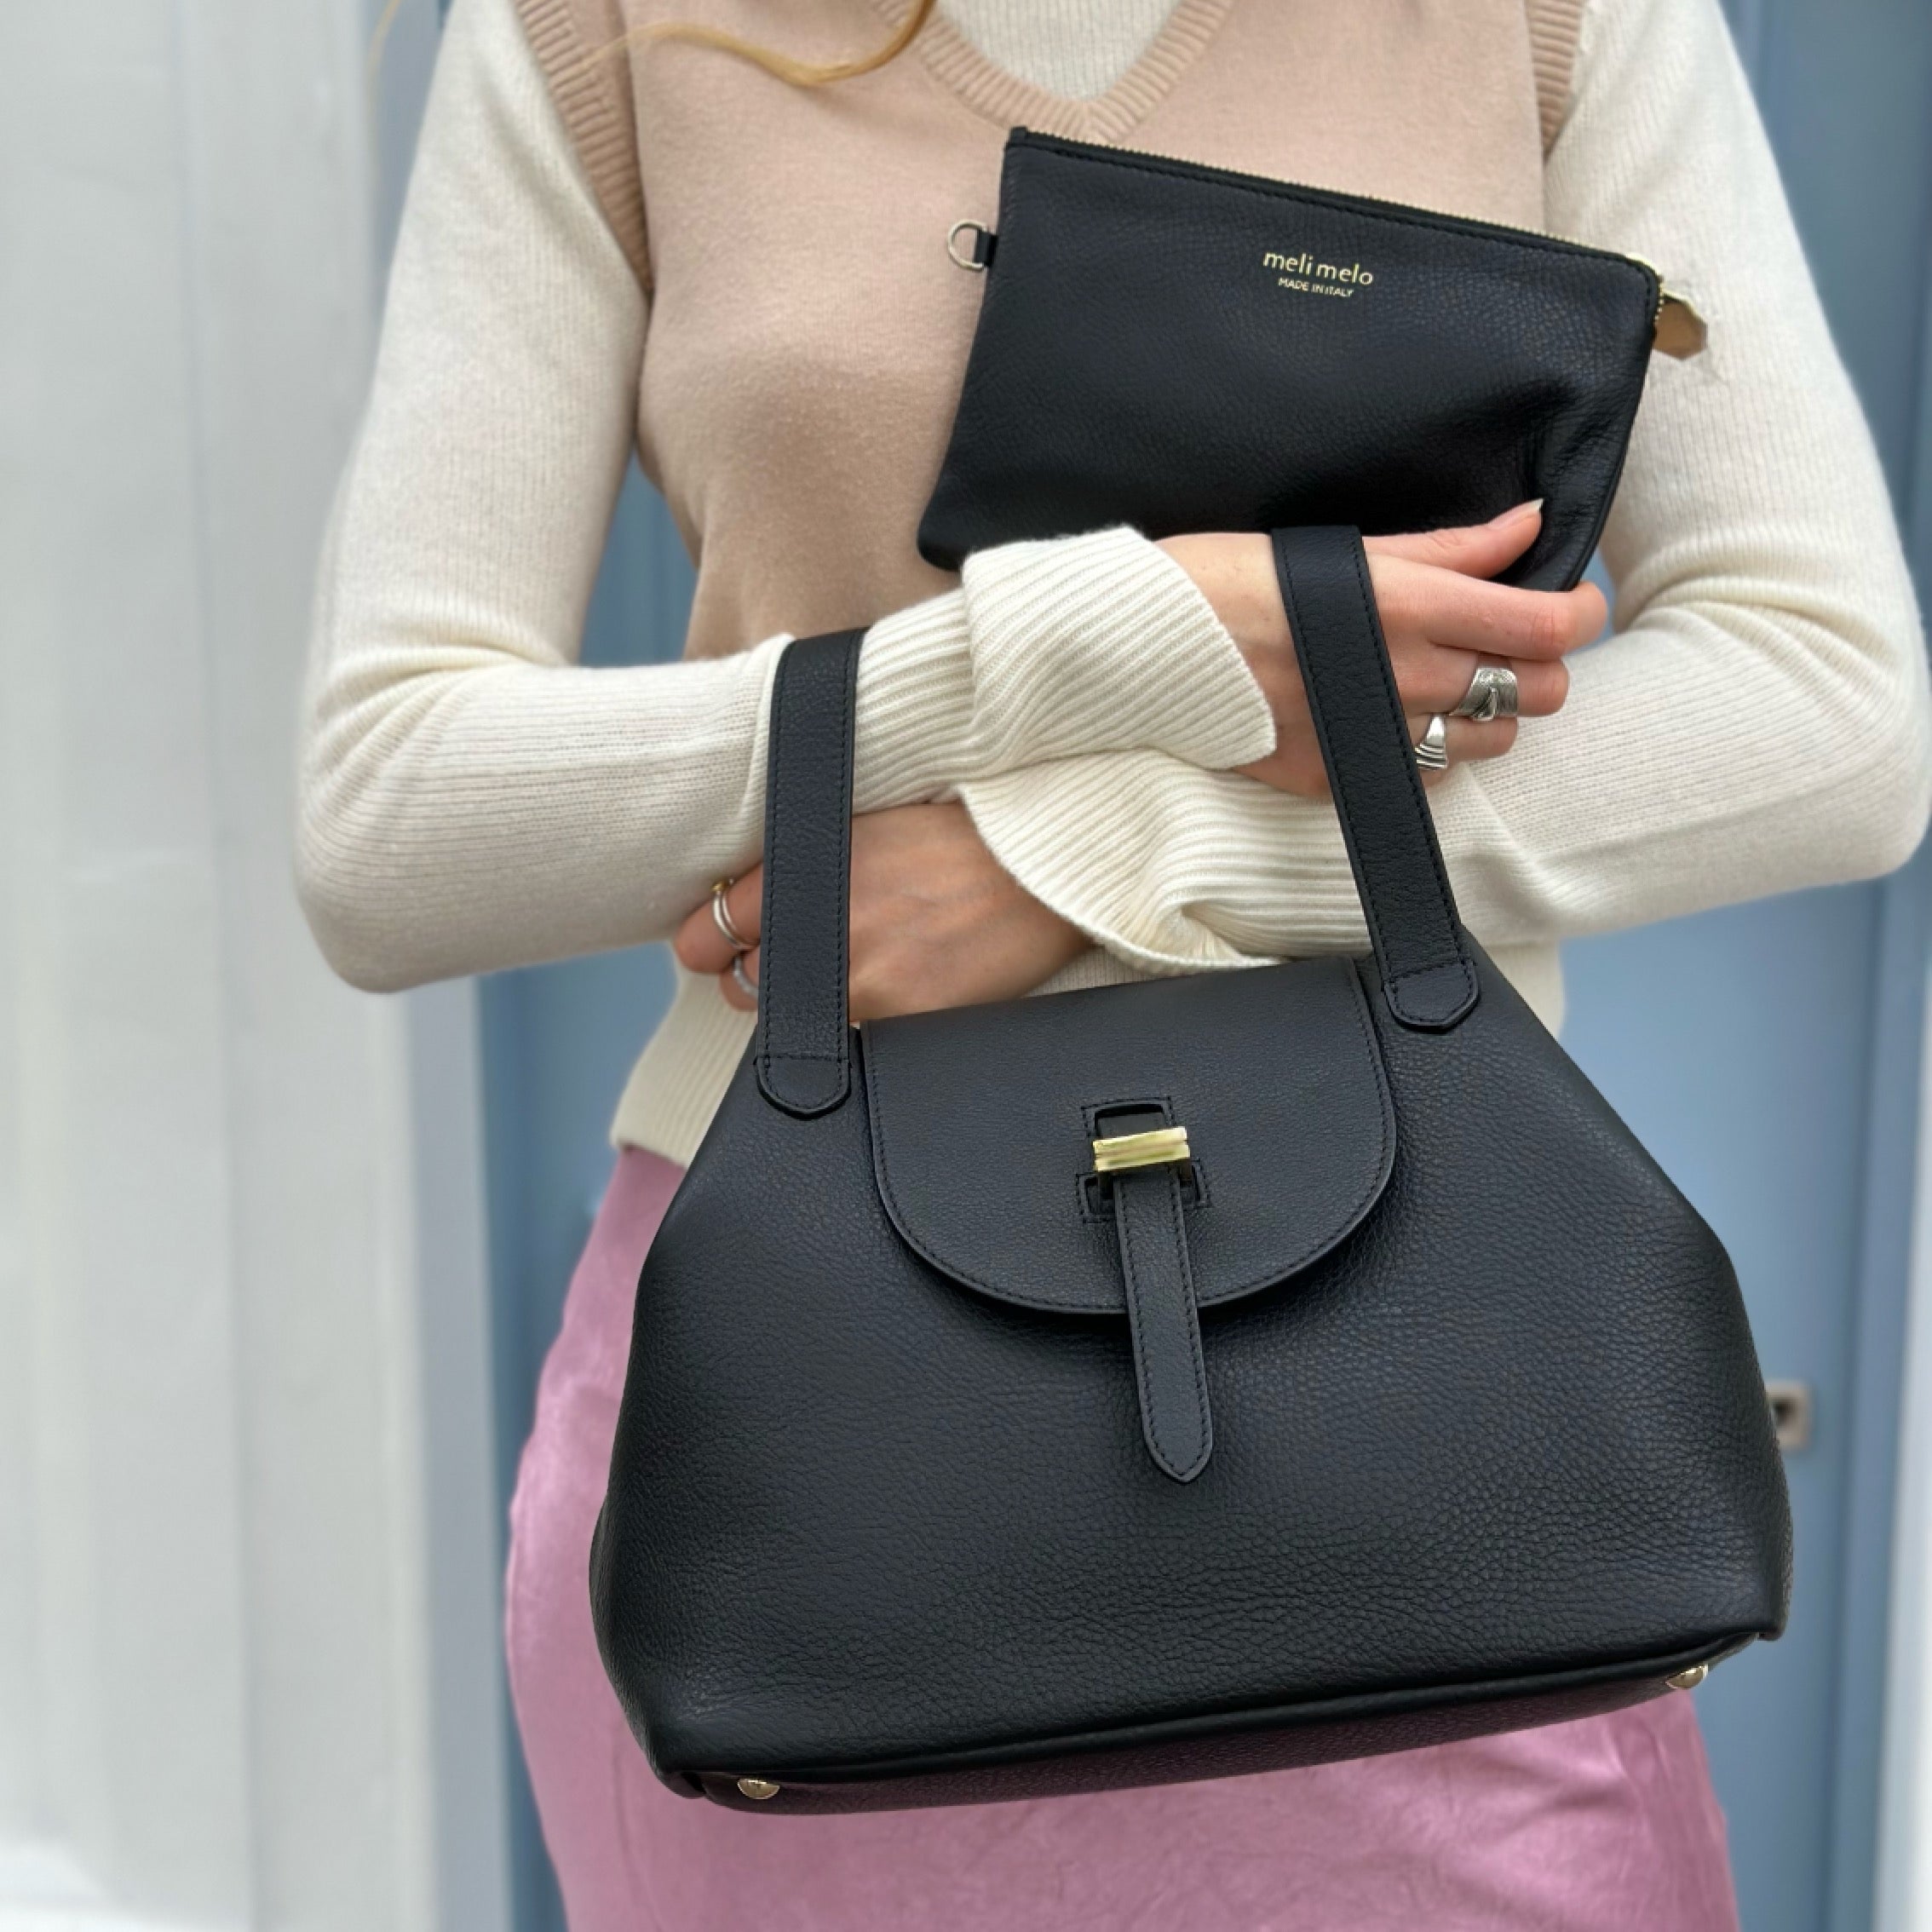 Meli Melo - Authenticated Handbag - Leather Black Plain for Women, Very Good Condition